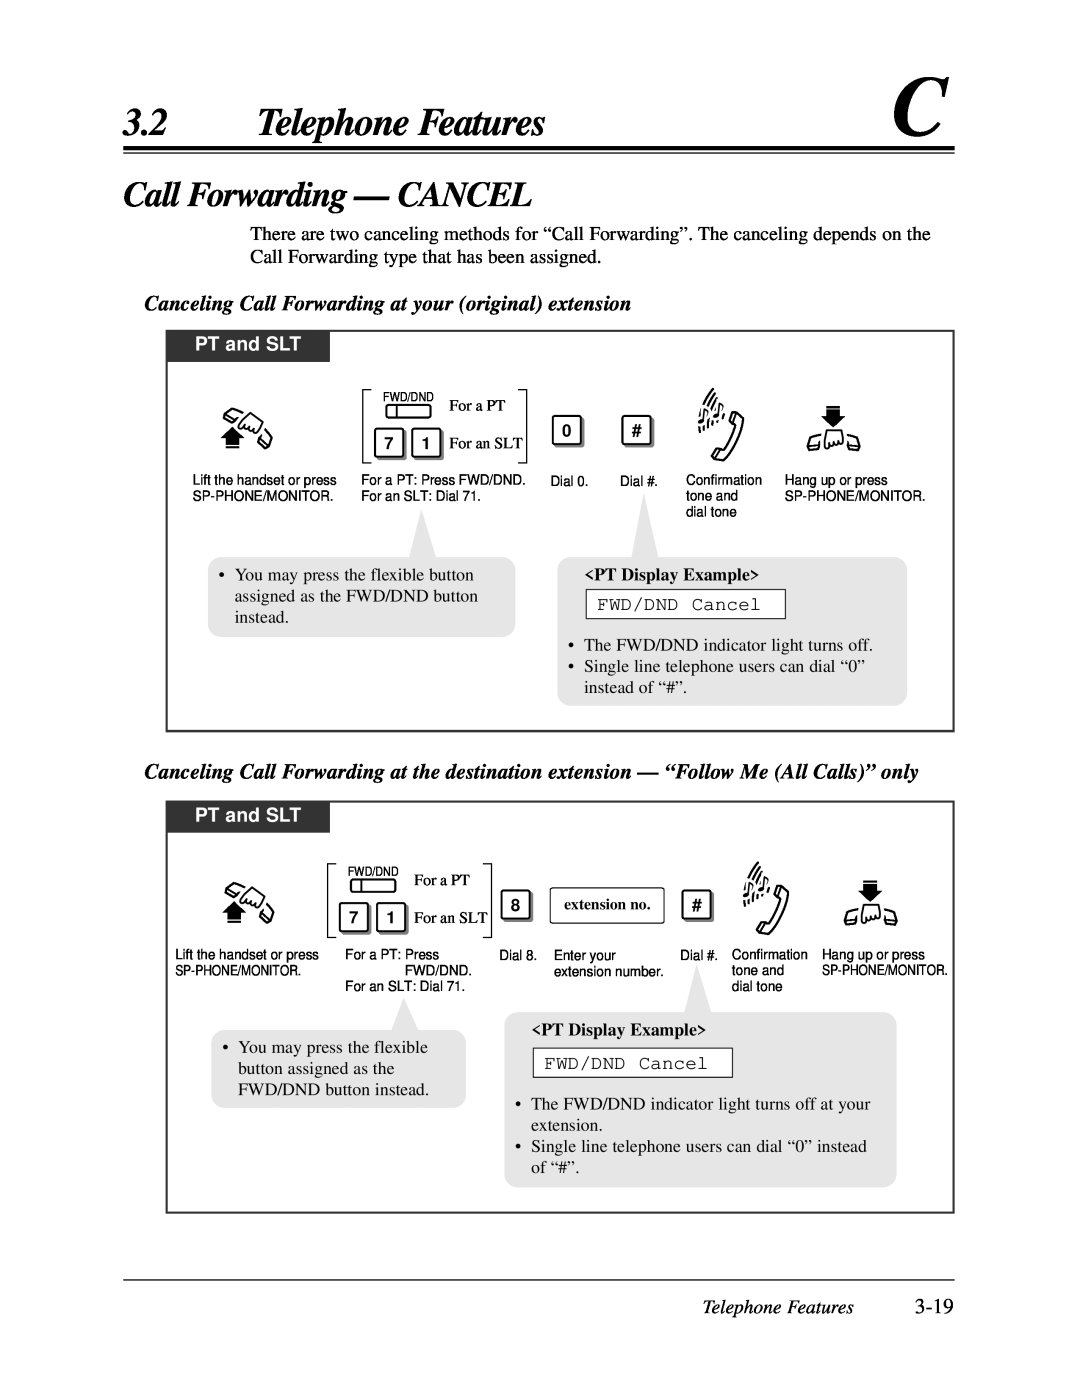 Panasonic KX-TA624 user manual Call Forwarding — CANCEL, 3-19, Telephone Features, FWD/DND Cancel 